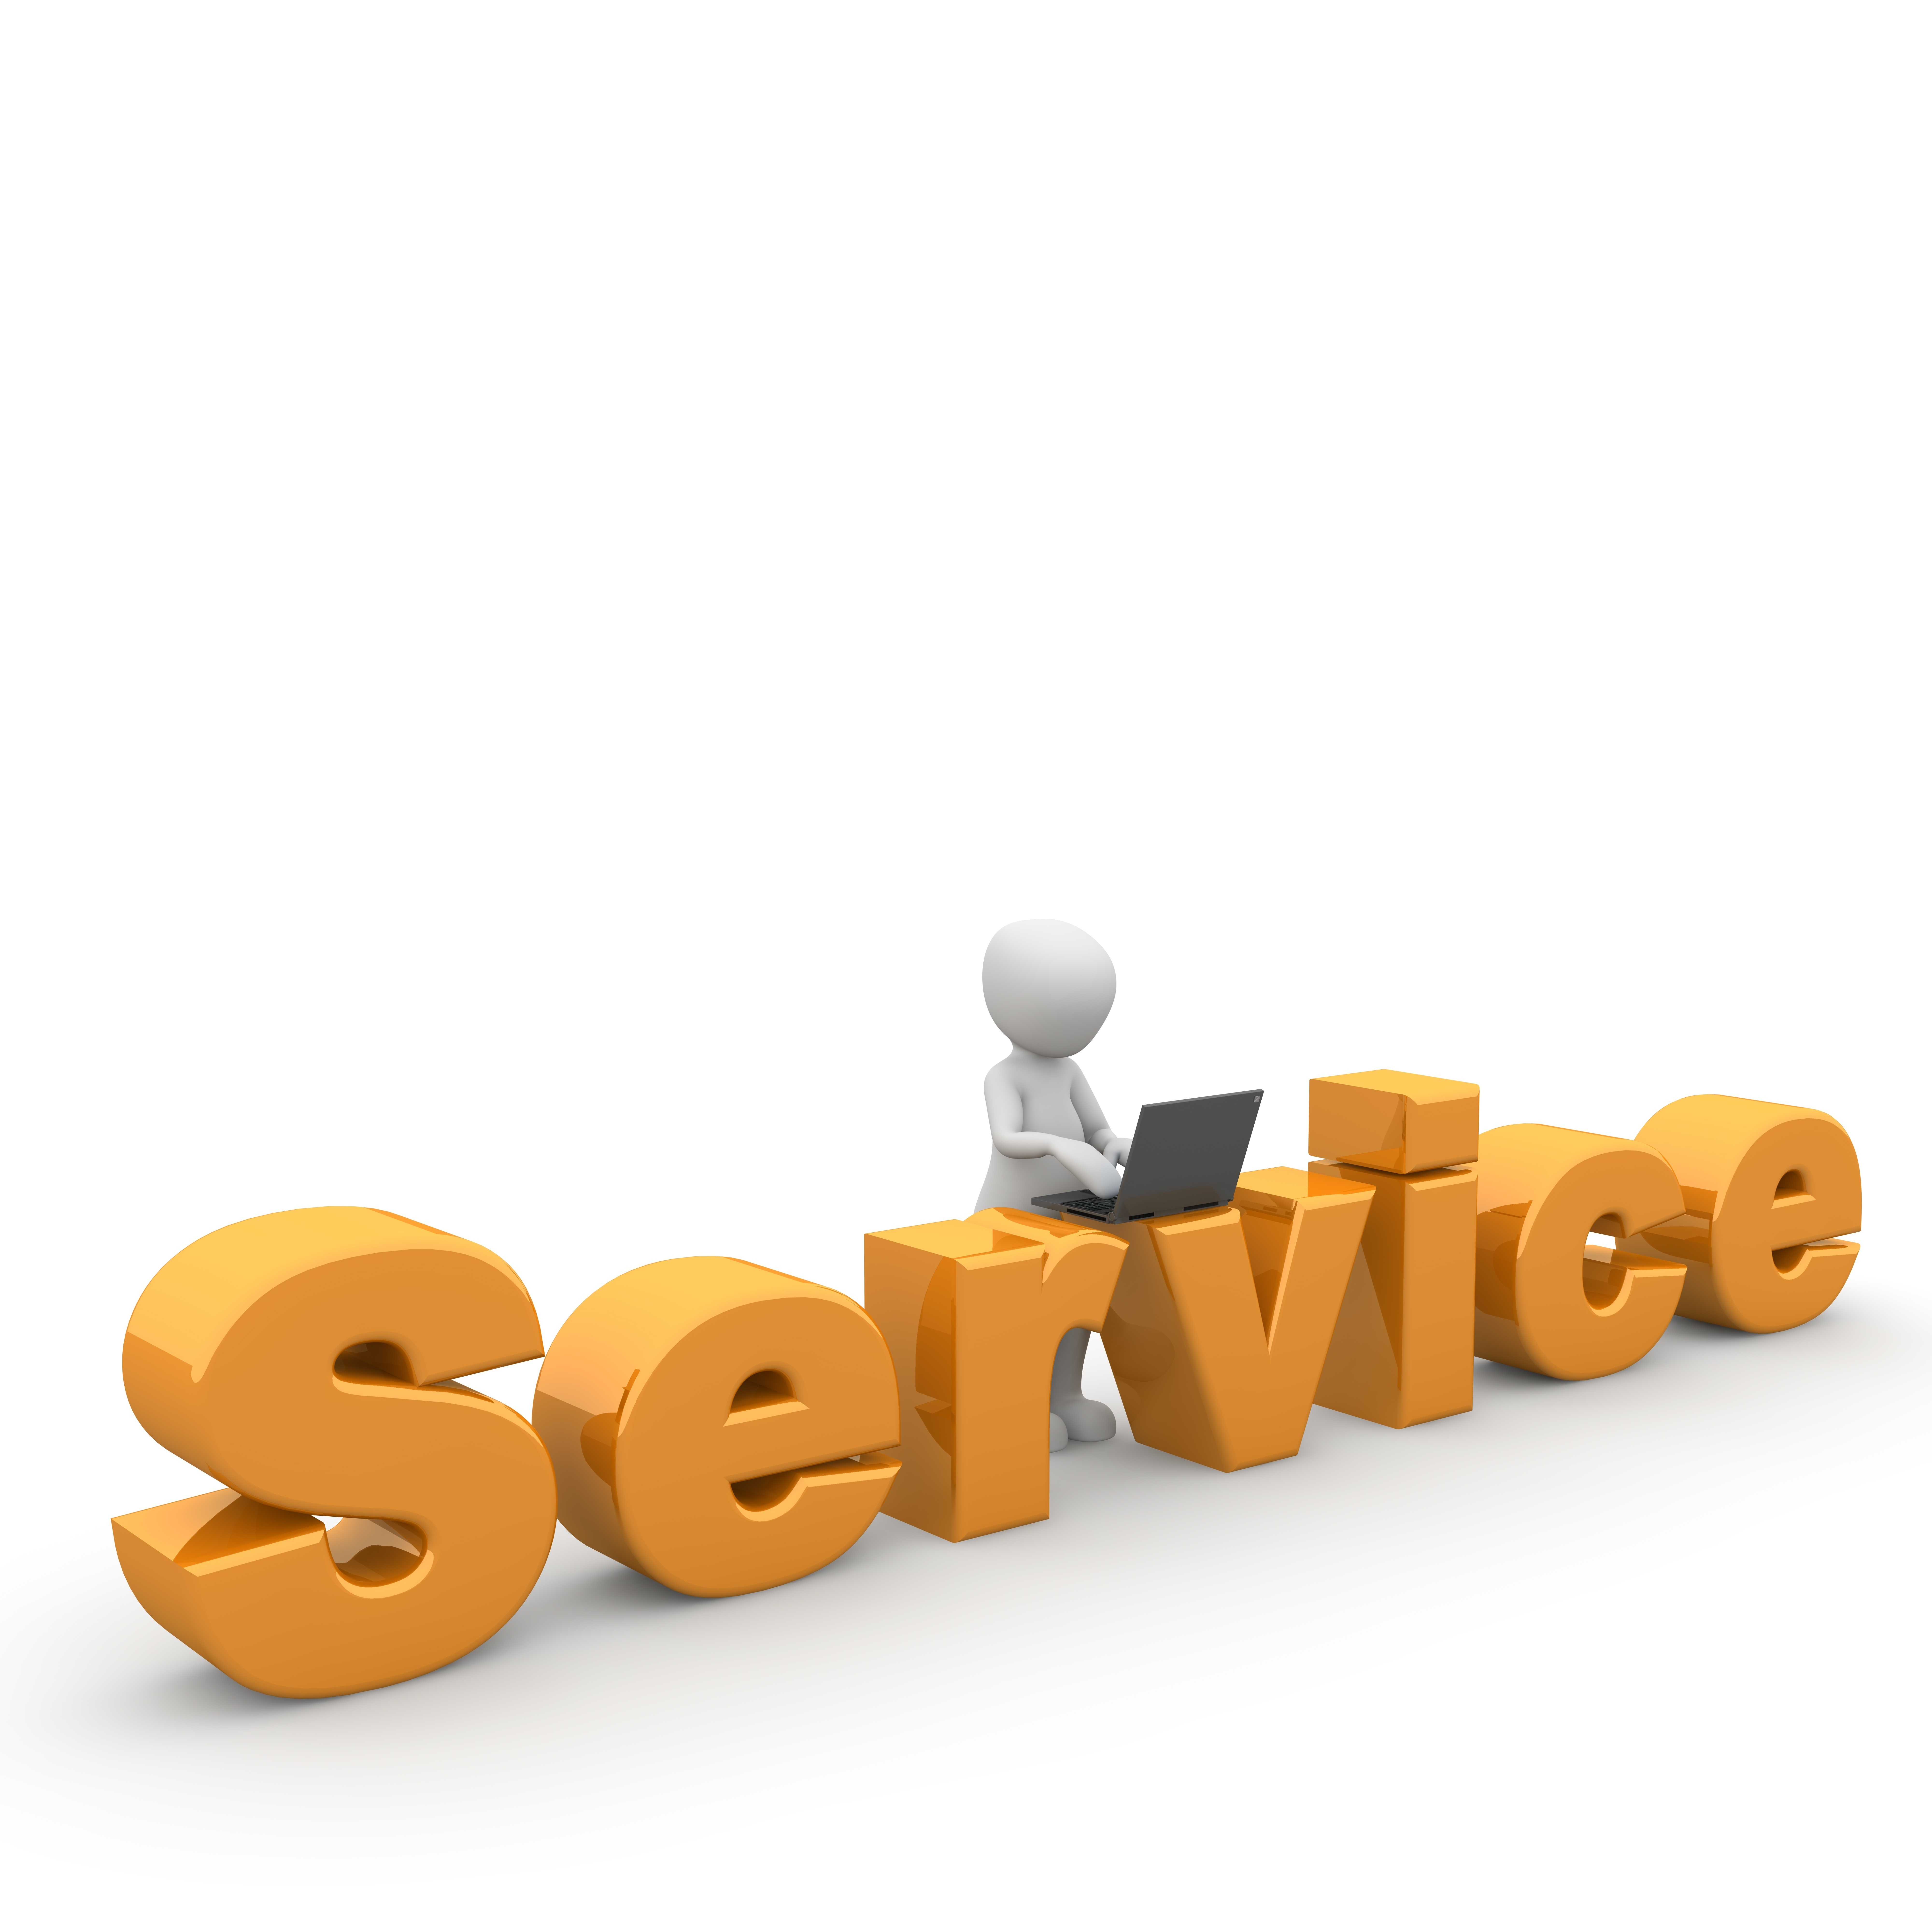 customer-service-part-1-why-focus-on-good-service-detroit-sponge